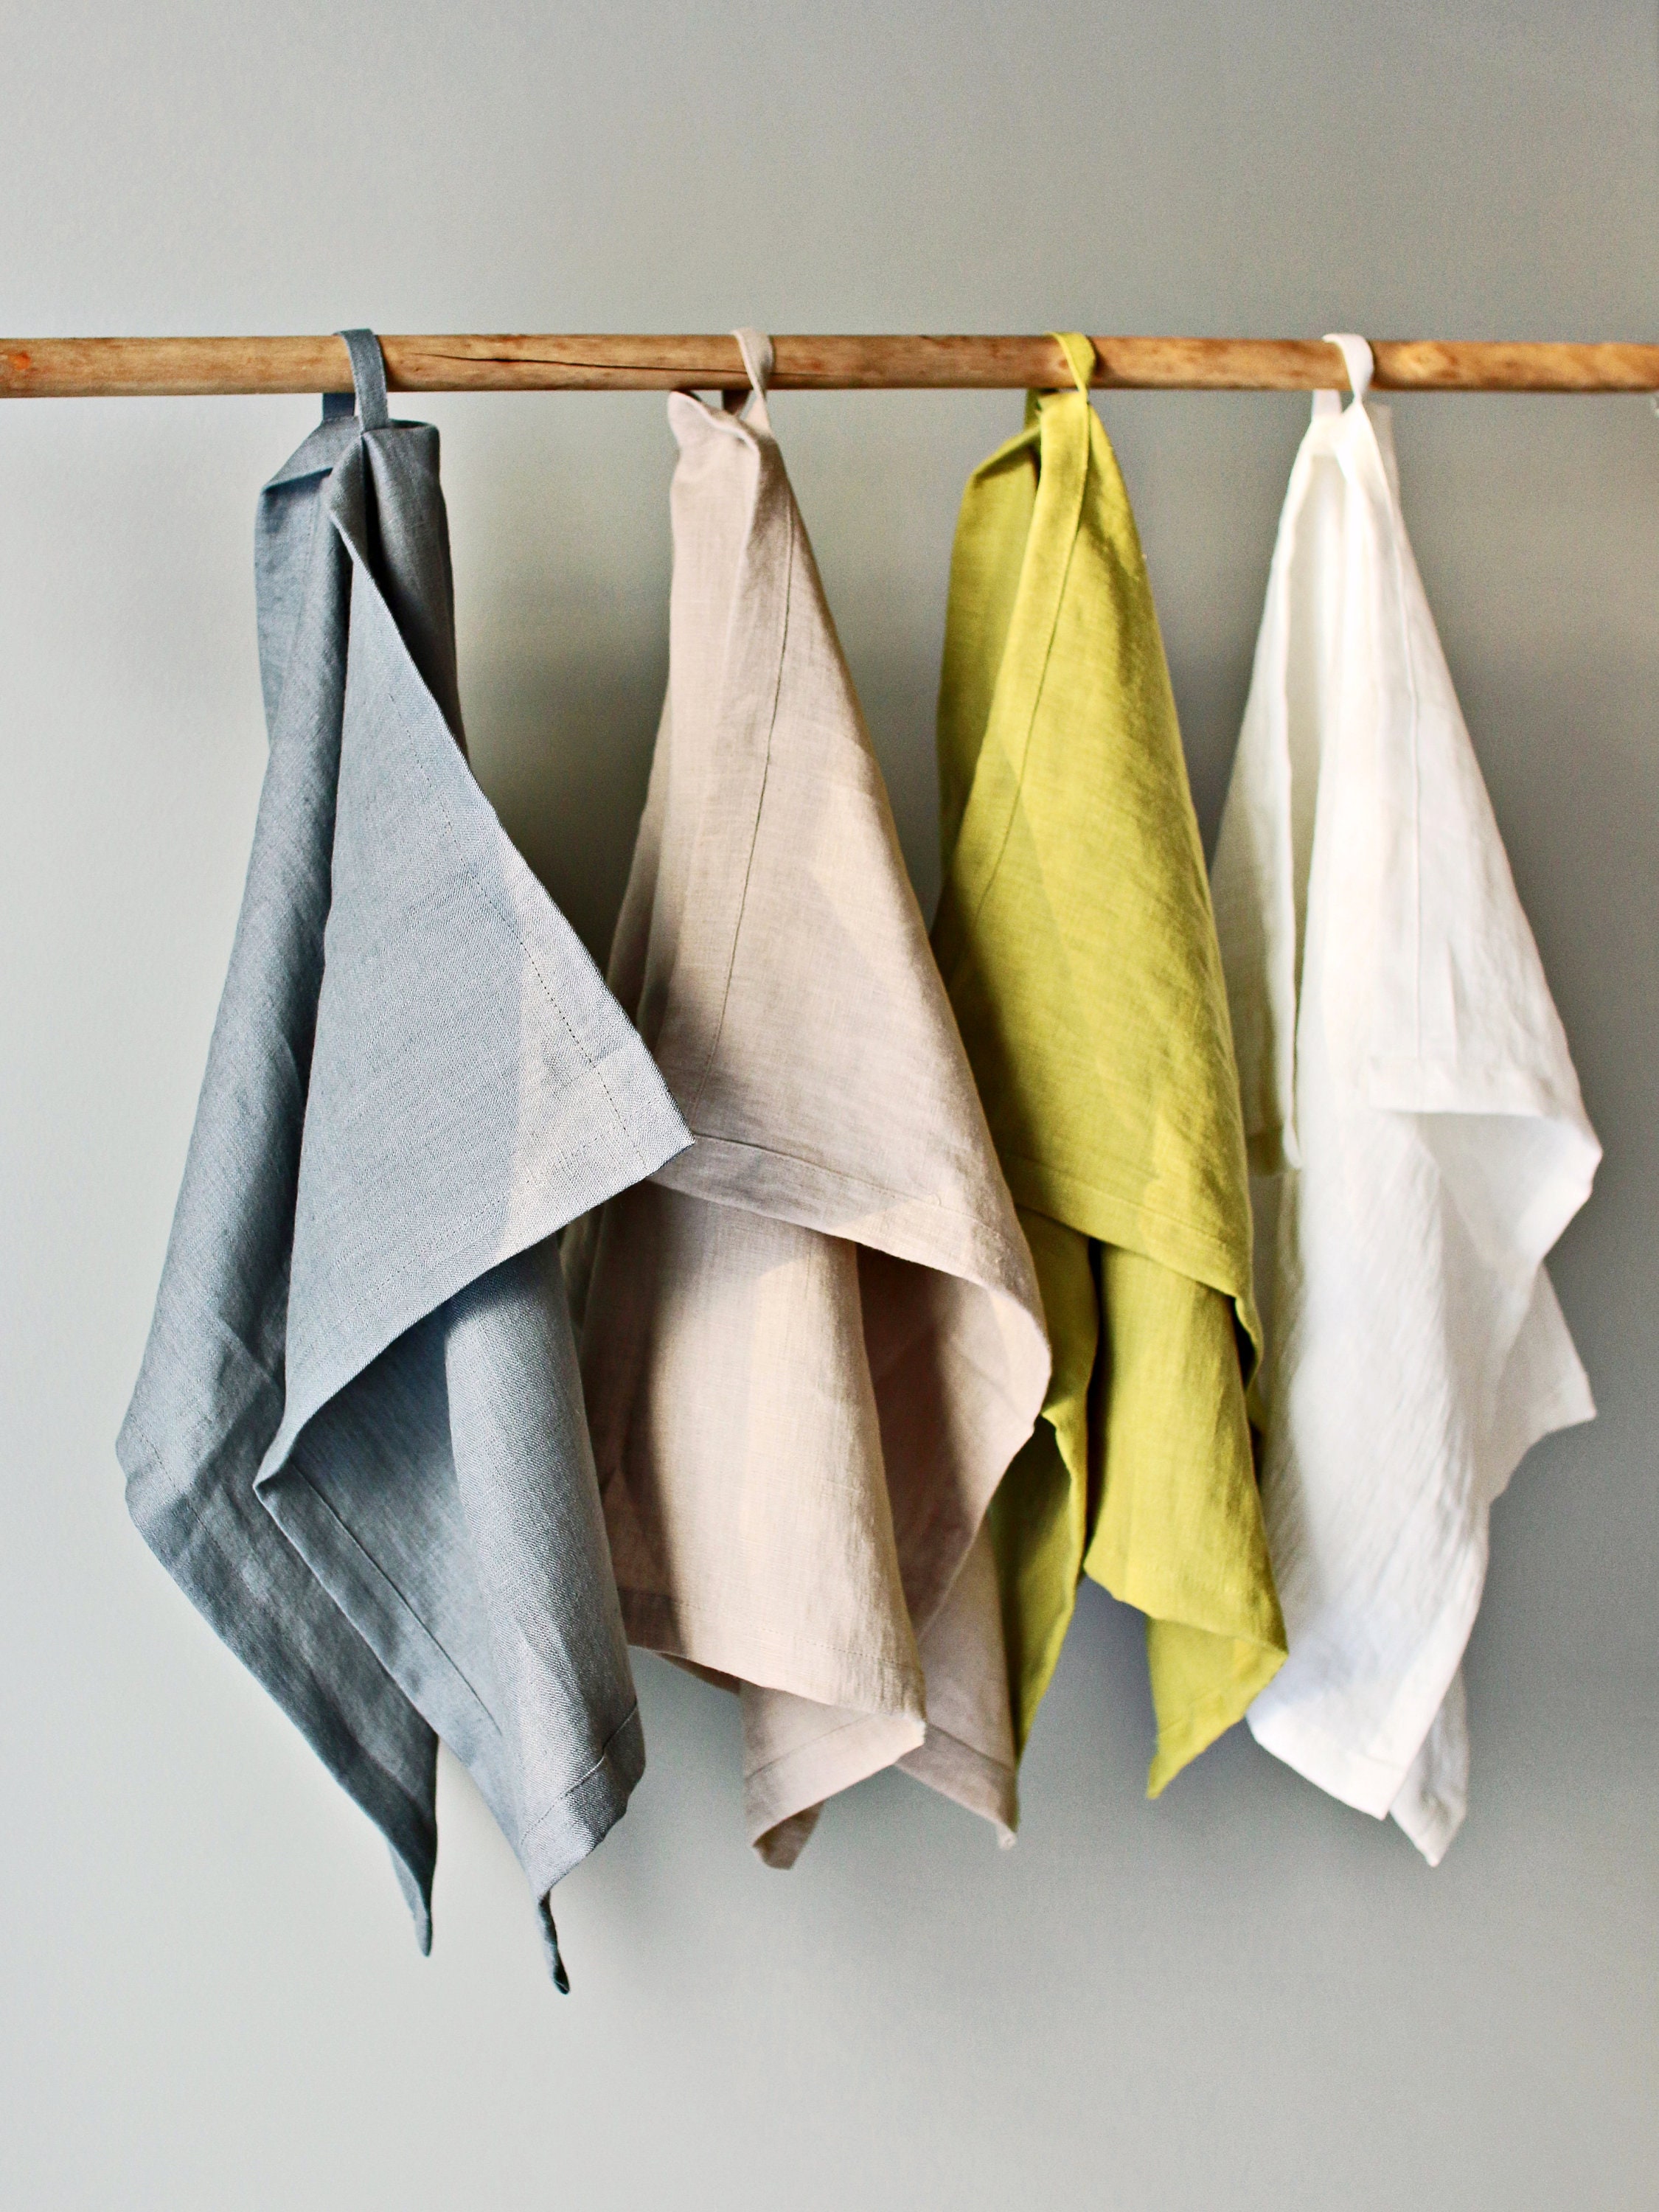 Linen Casa Kitchen Towel - White Stripes on Light Heather Blue